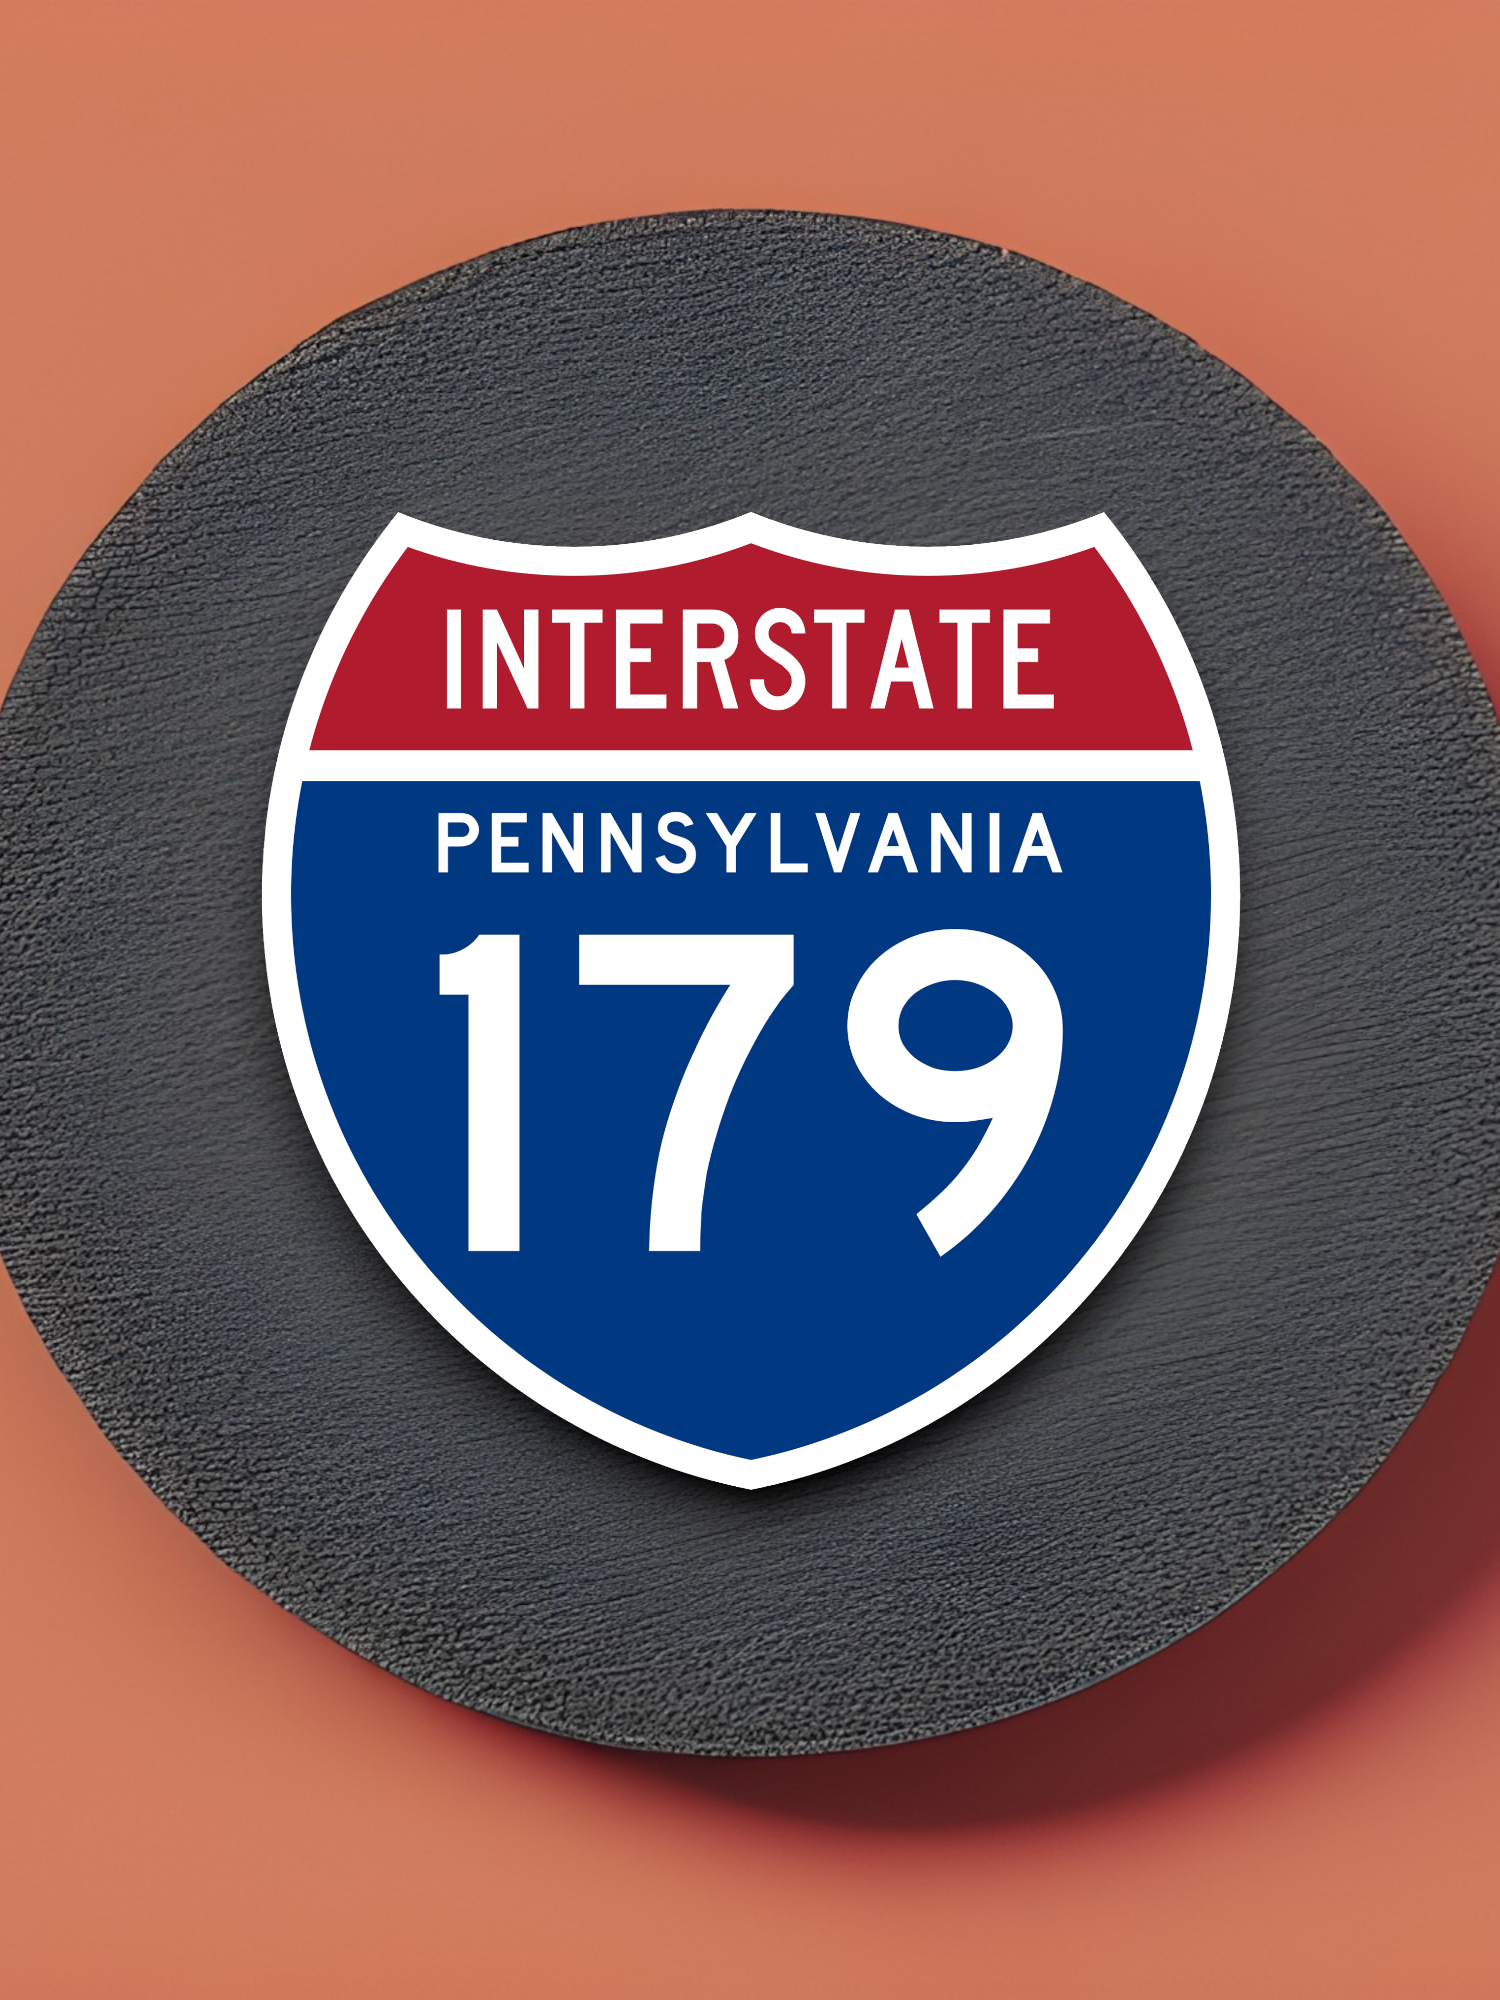 Interstate I-179 Pennsylvania Sticker